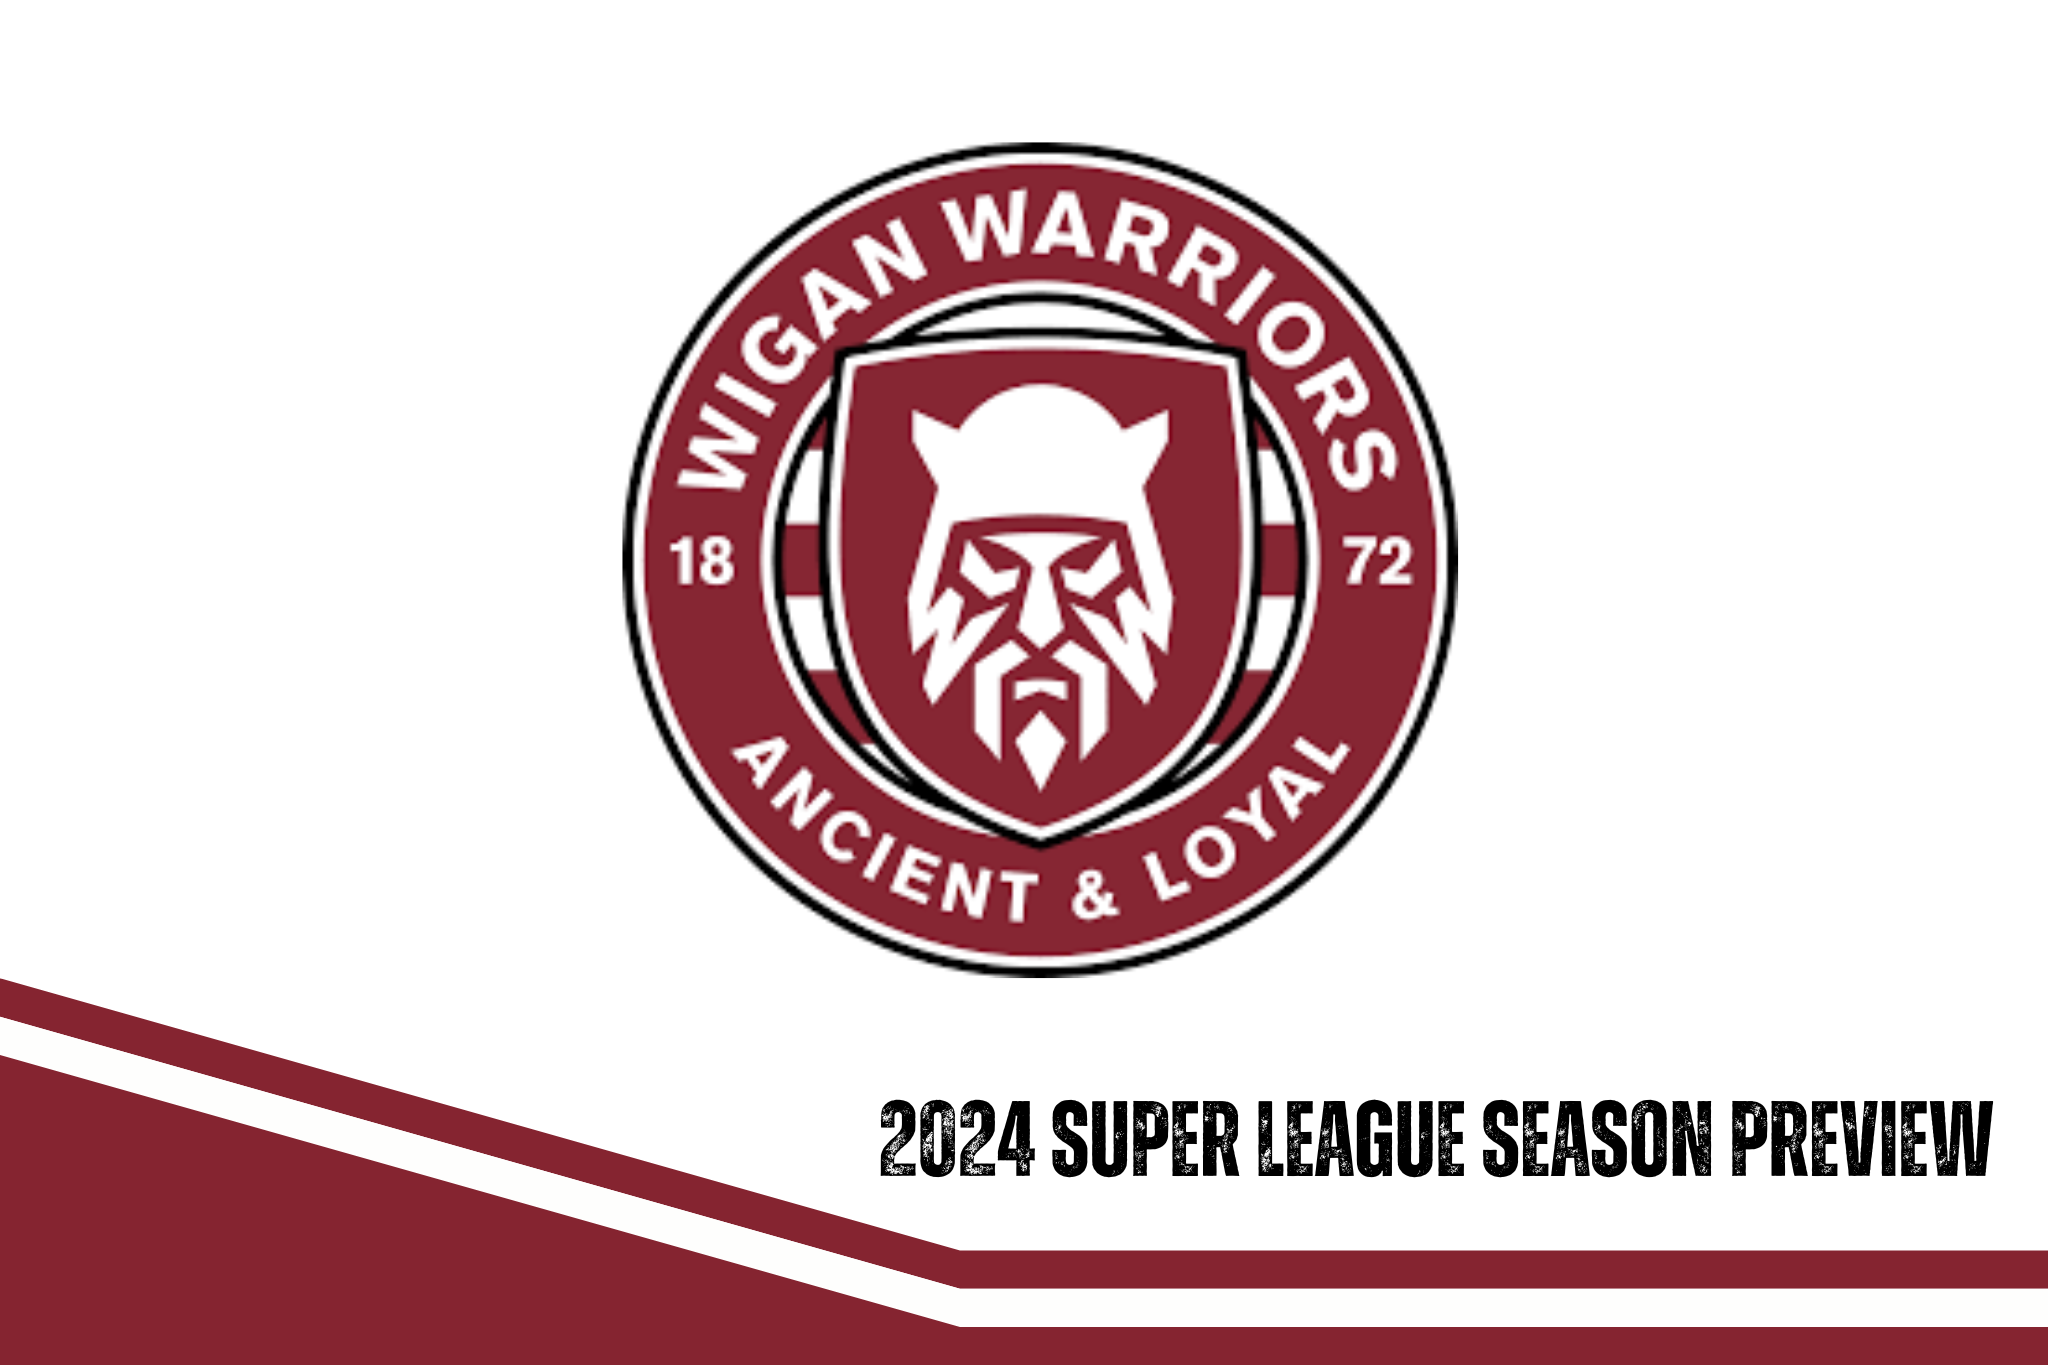 Wigan Warriors 2024 season preview